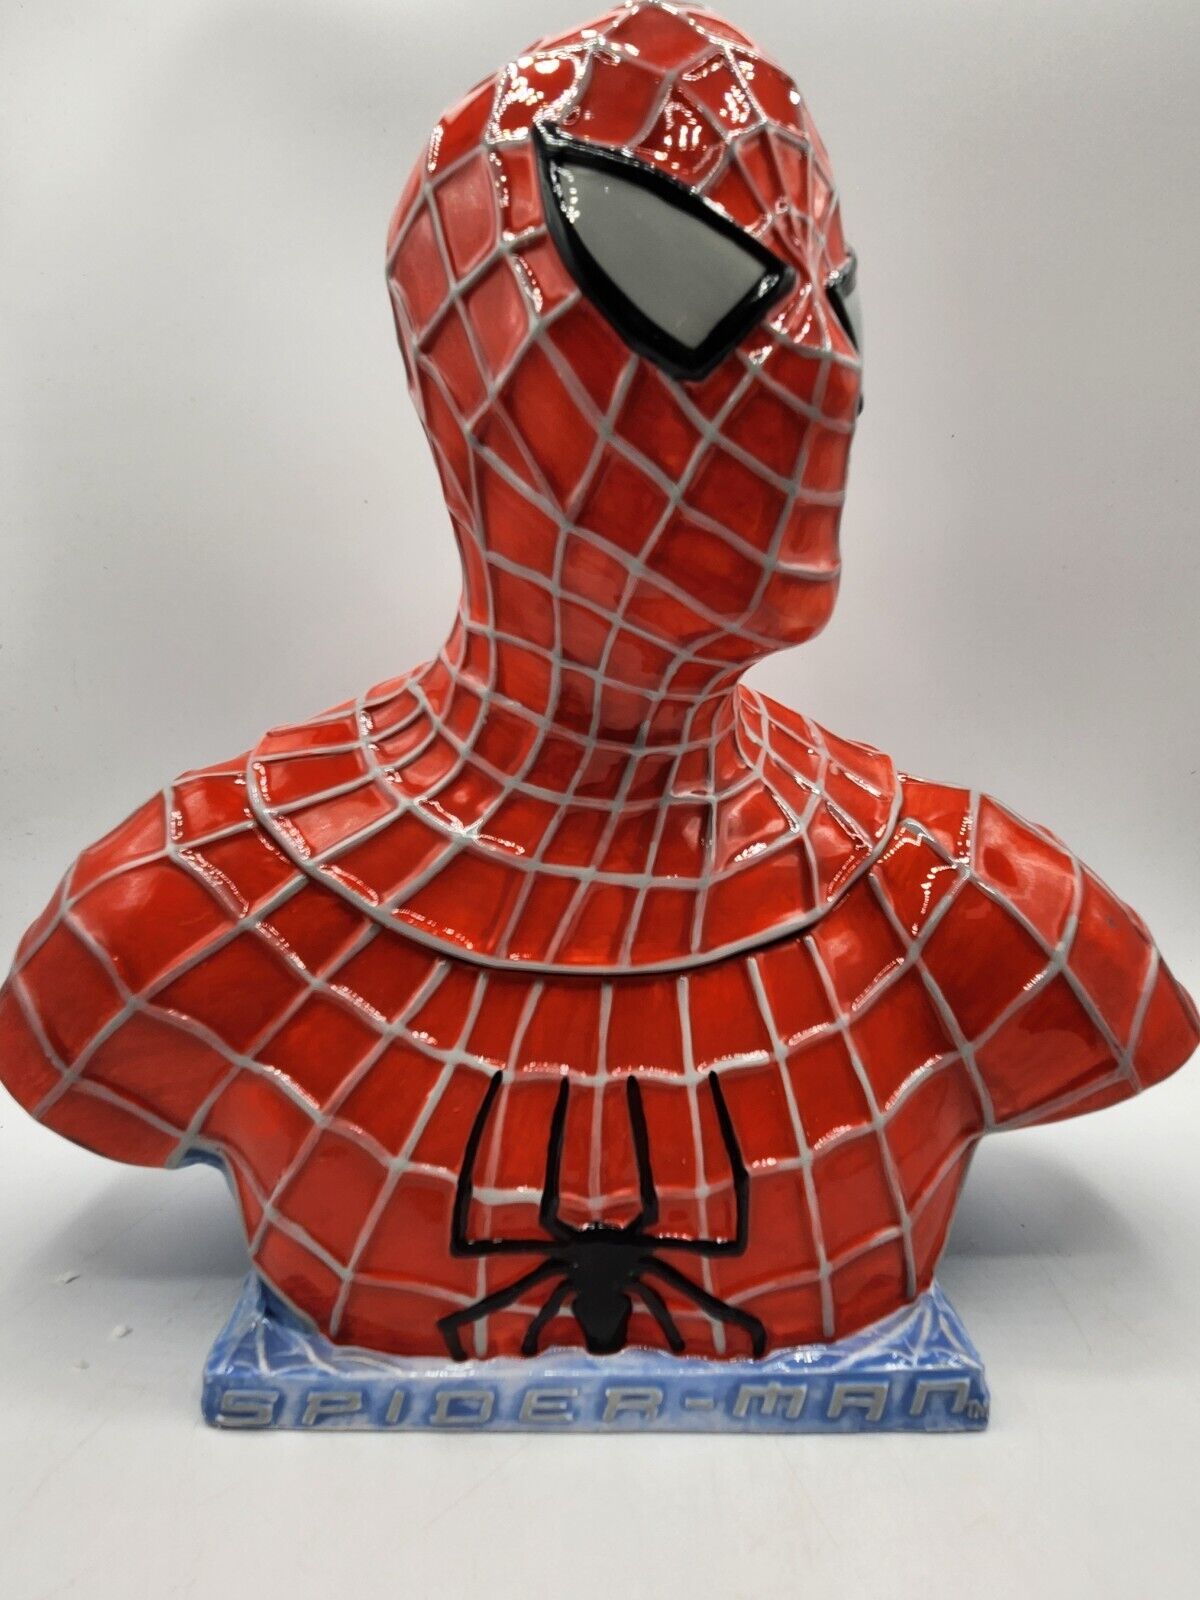 NECA Marvel Comics 2002 Spider-Man Bust Ceramic Cookie Jar